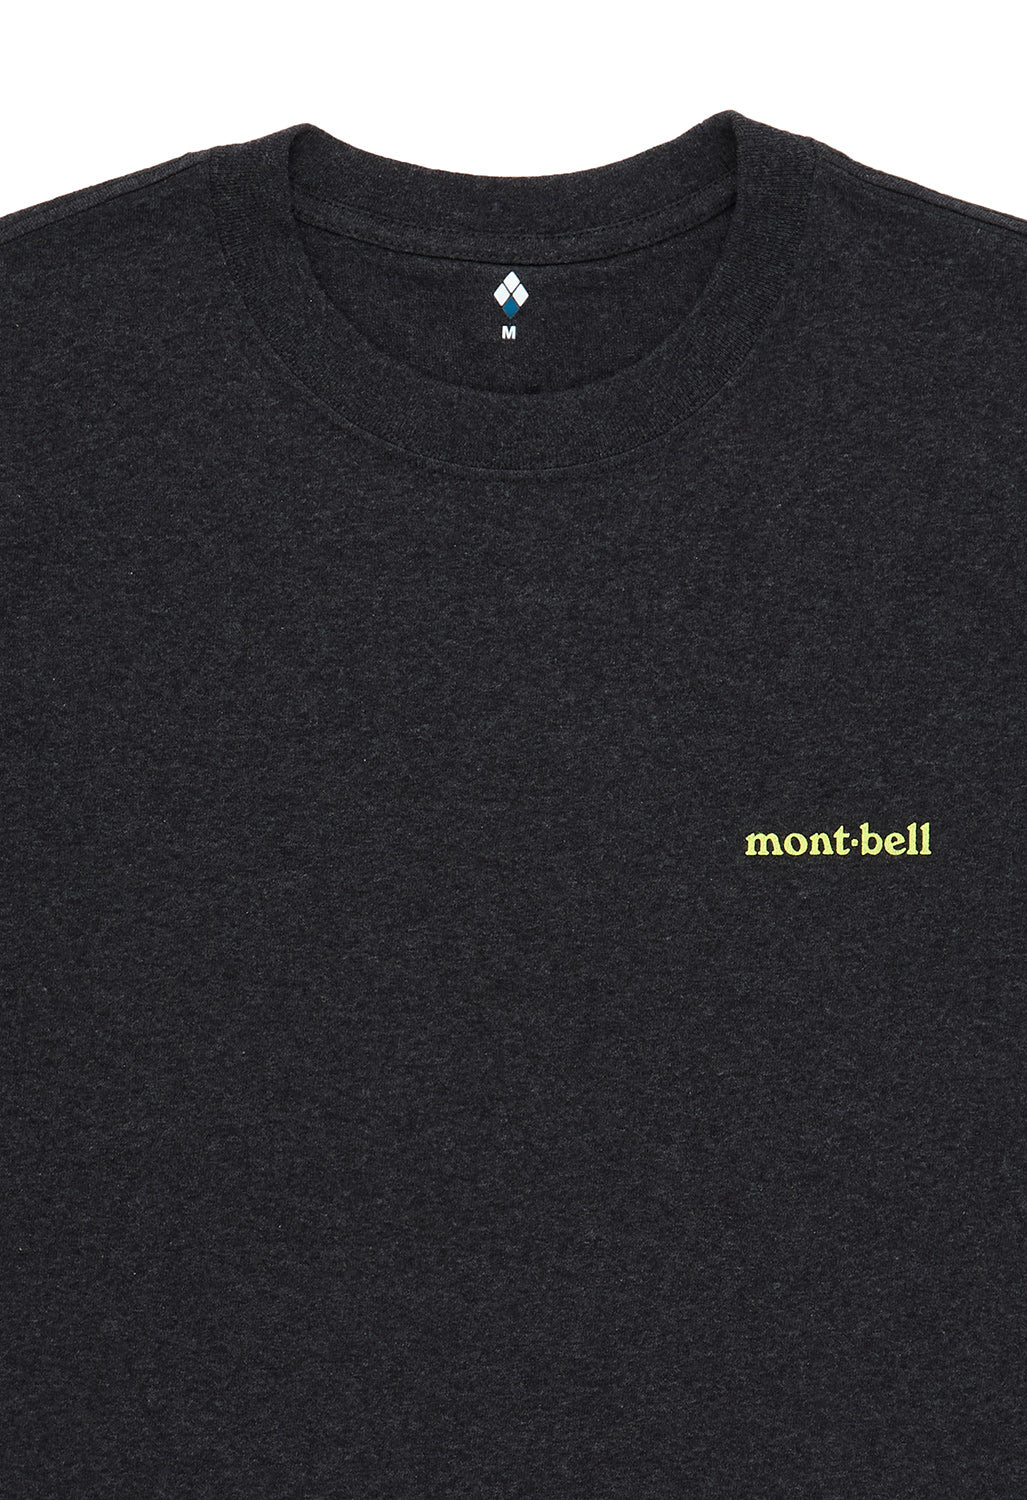 Montbell Pear Skin Cotton Climbing T-Shirt - Dark Grey